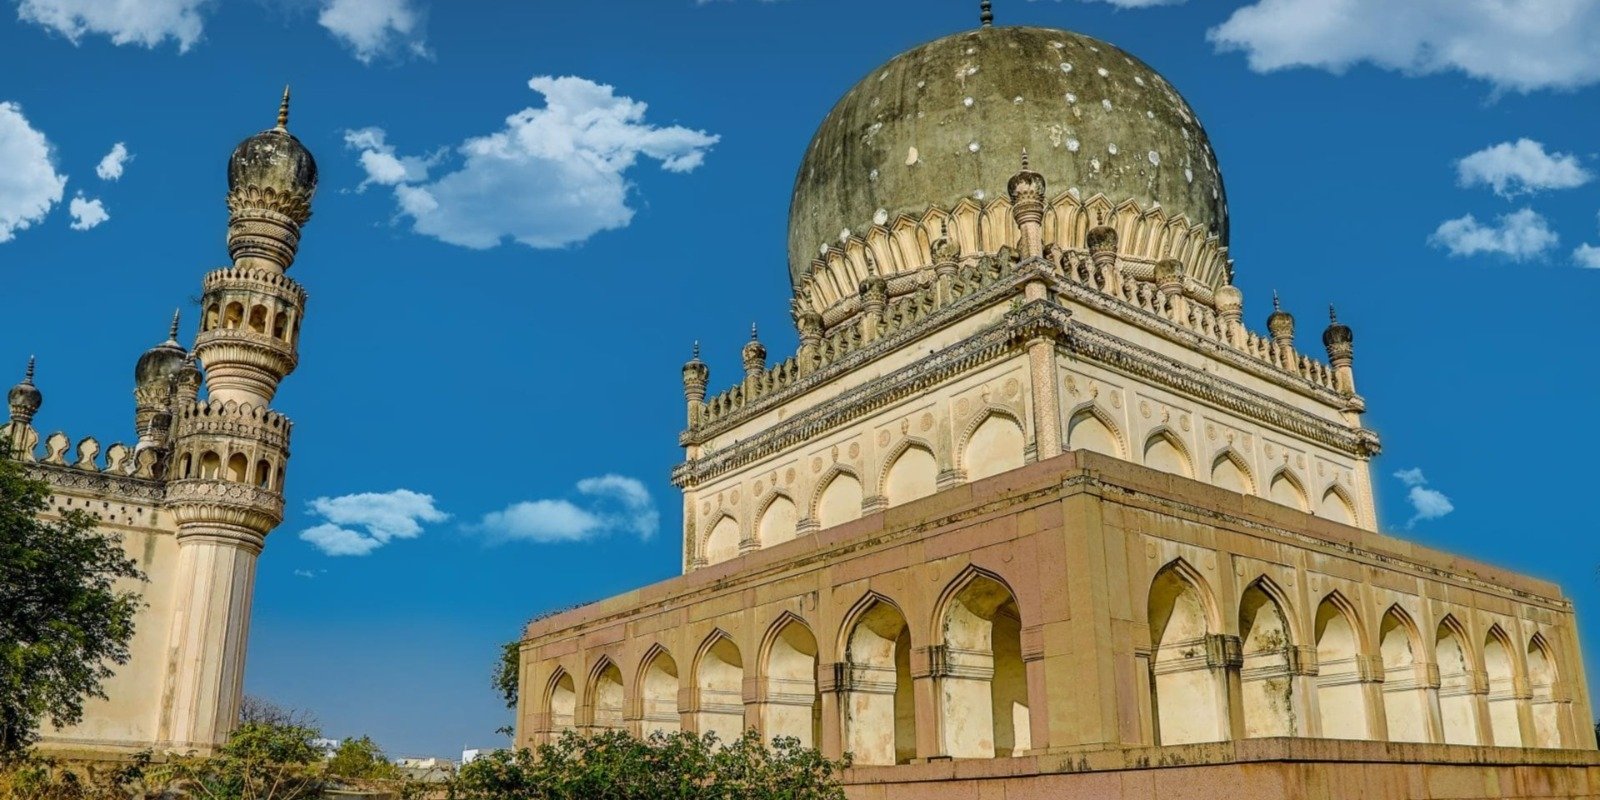 Hyderabad to Vadodara Drive to Explore the Man-made Wonder of India